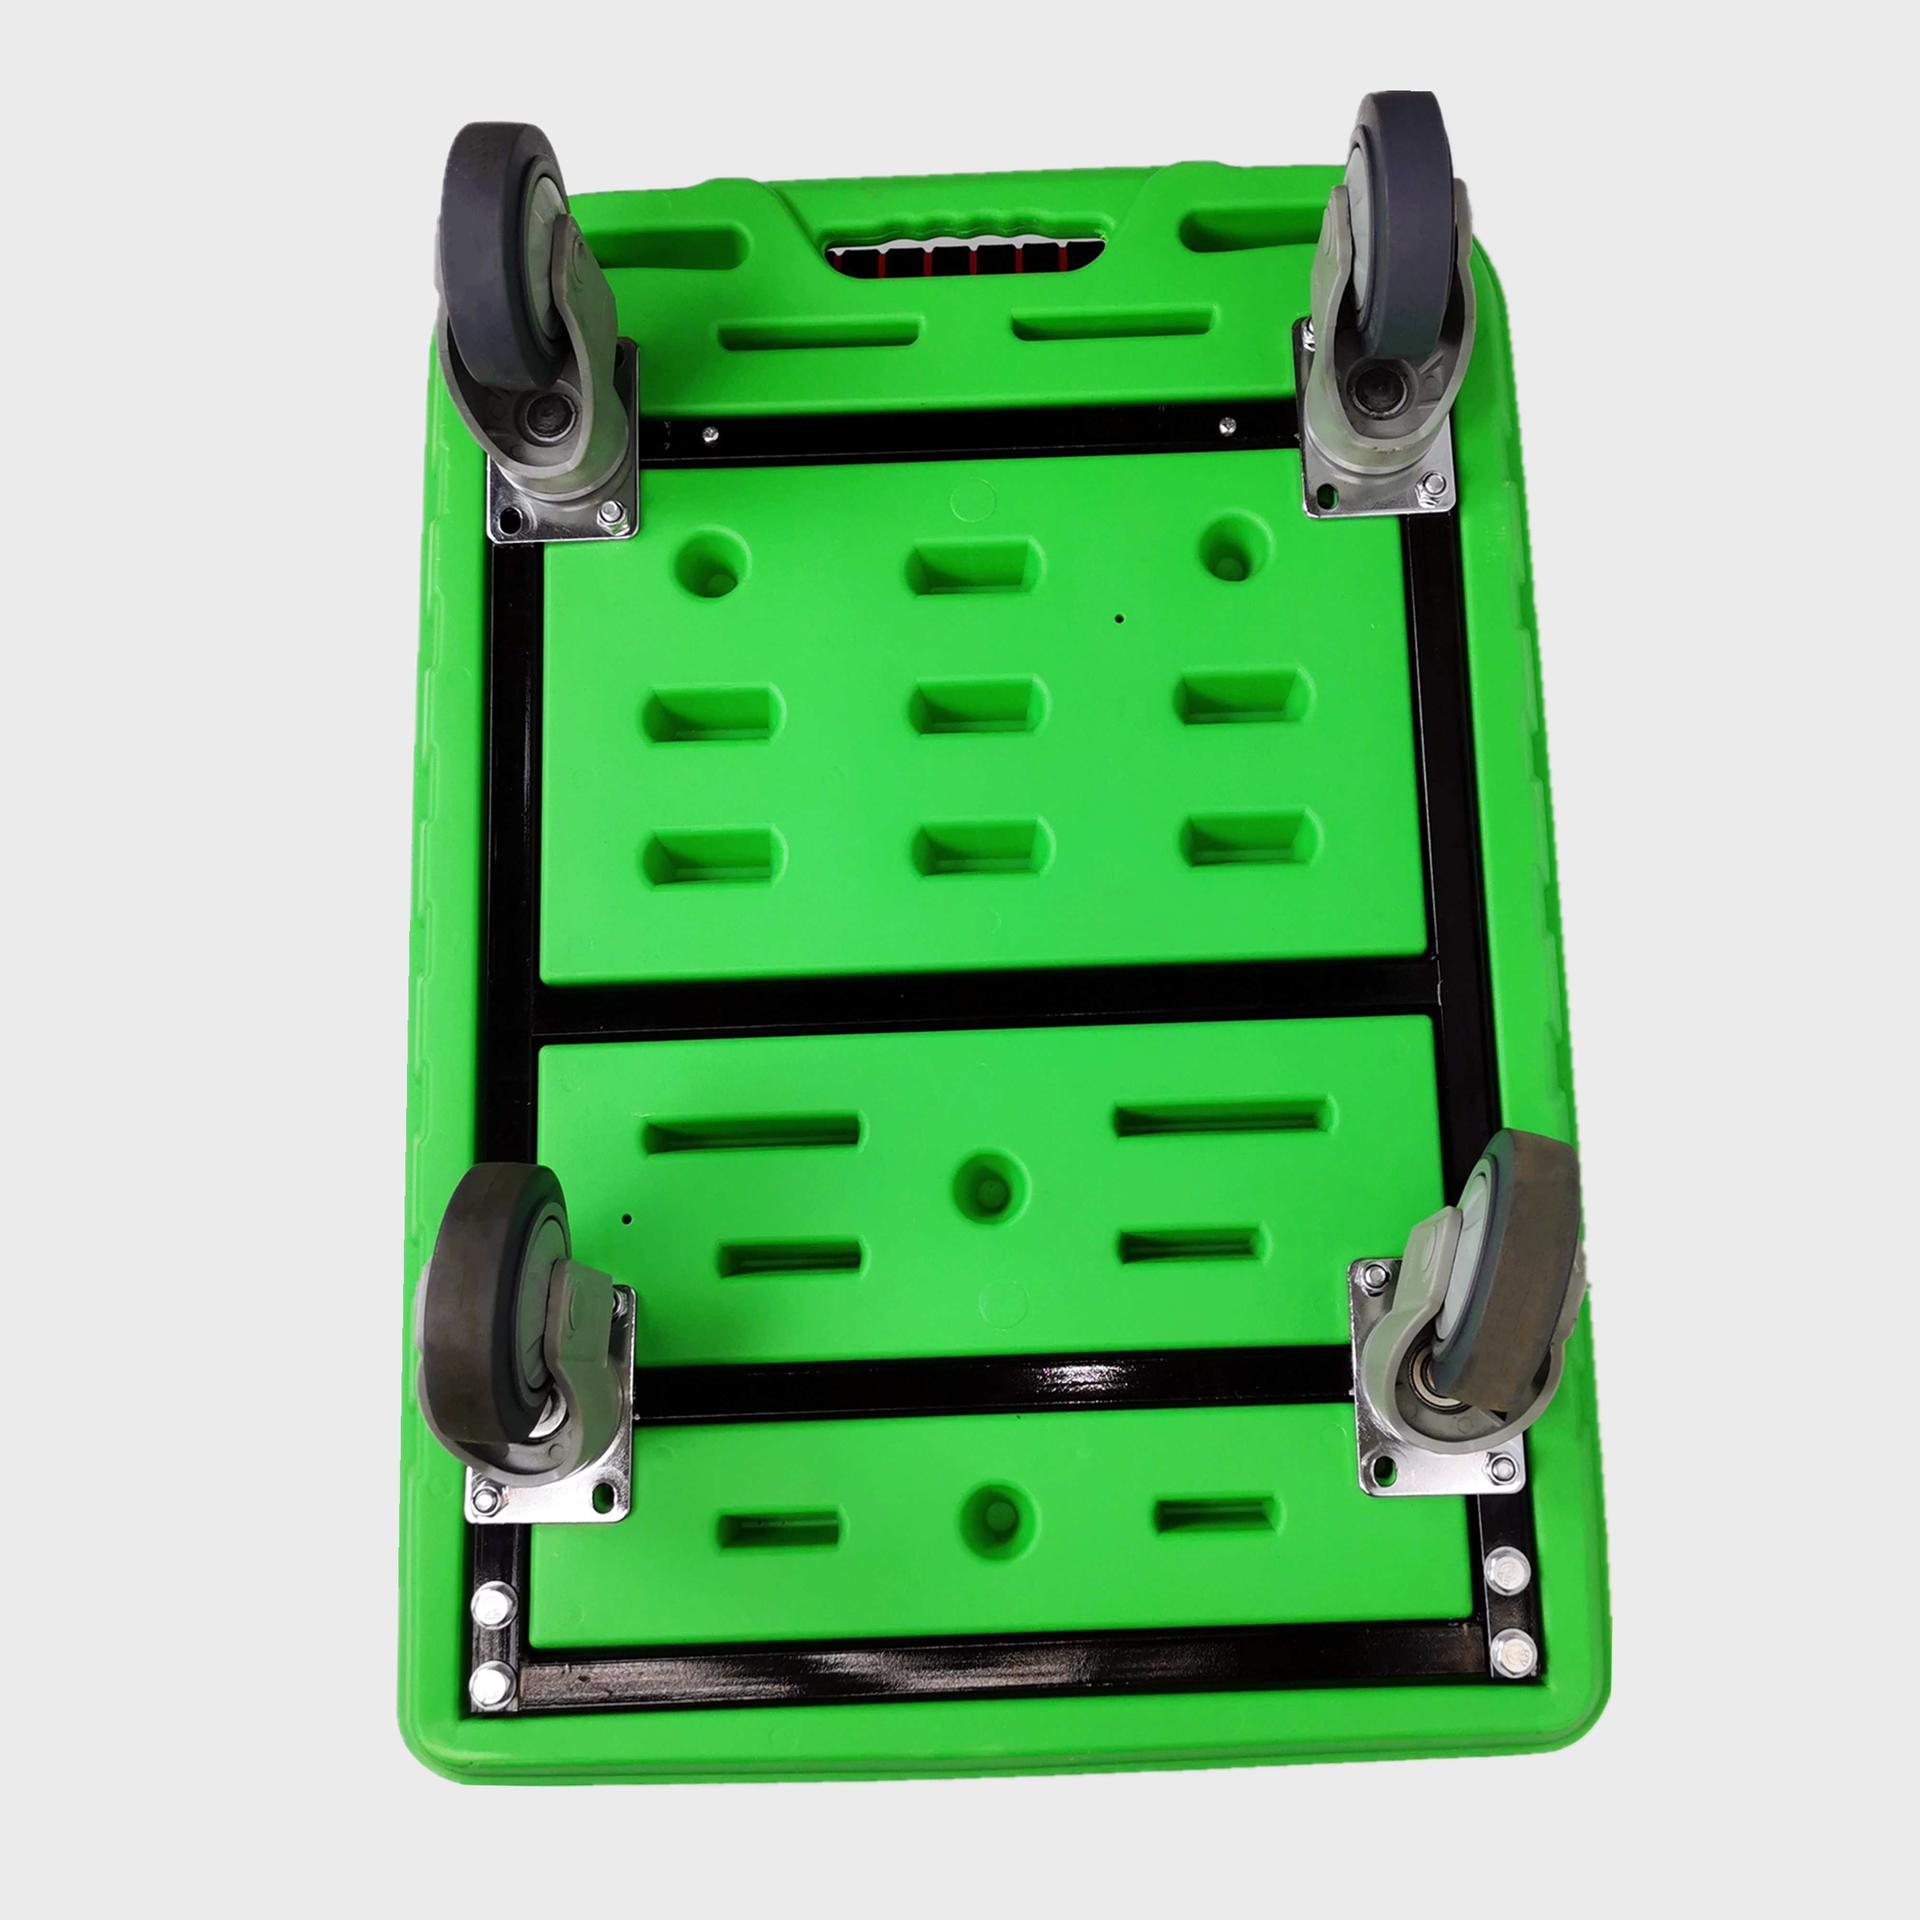 Durable Push Hand Trolley with 4 TPR Swivel Bearing Plastic Wheels 660 Lbs Capacity Green Folding Platform Truck Flatbed Cart